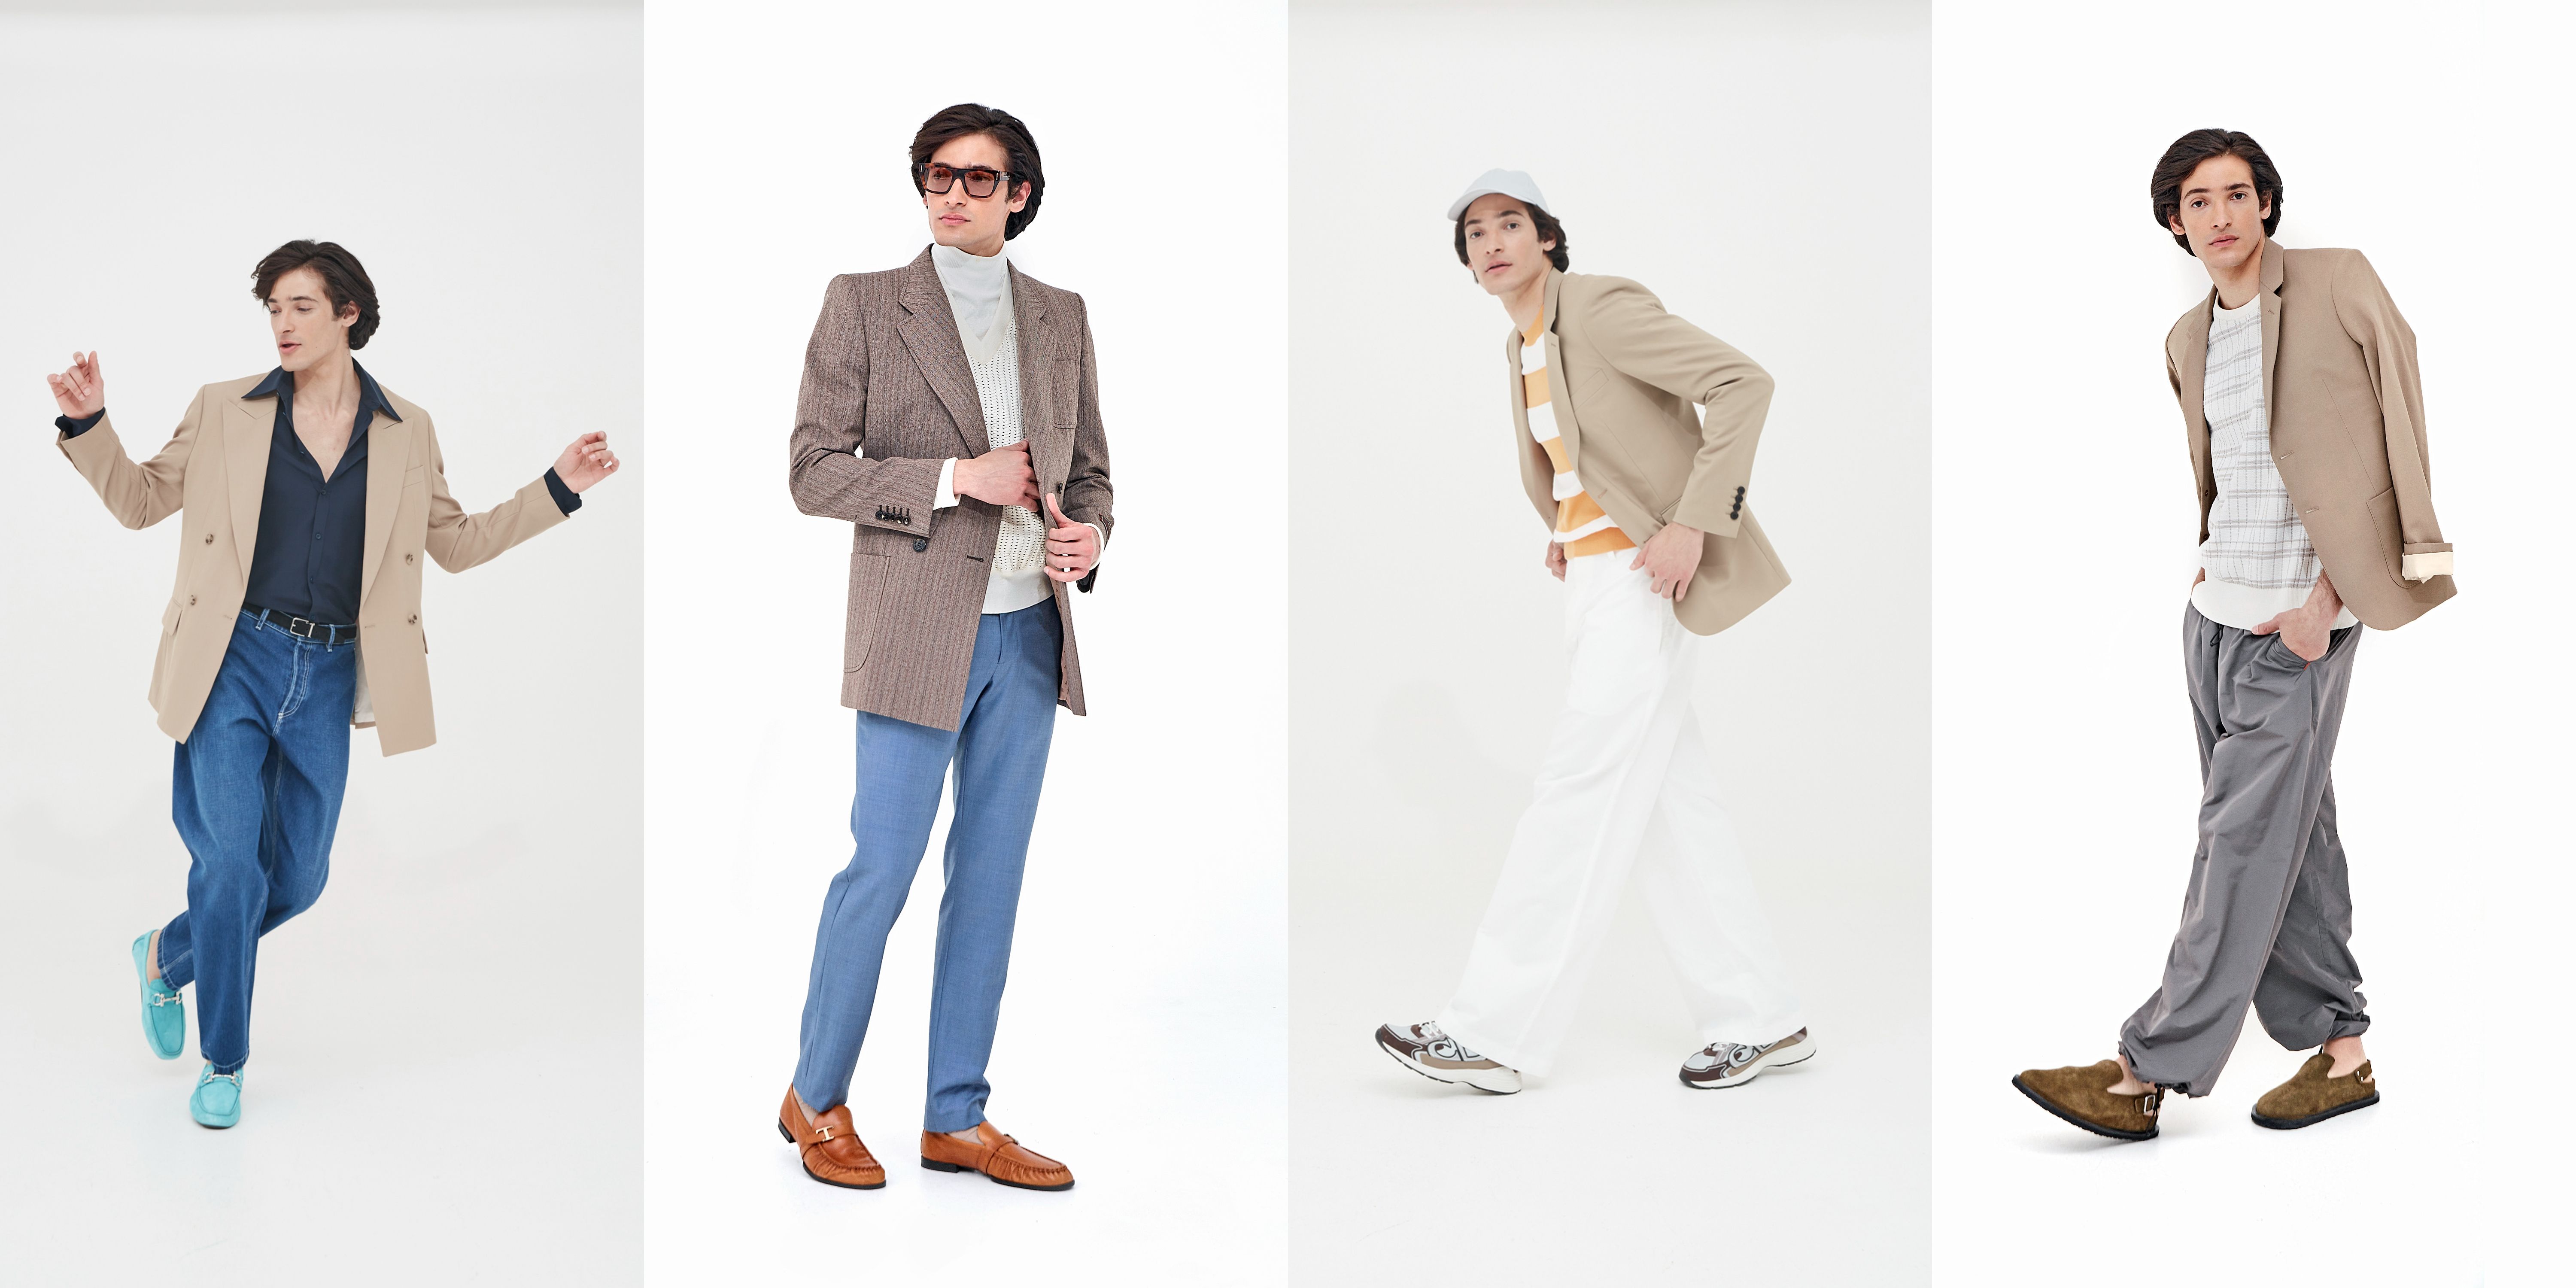 623-large-como-combinar-una-americana-hombre-street-style-casual-blazer-looks